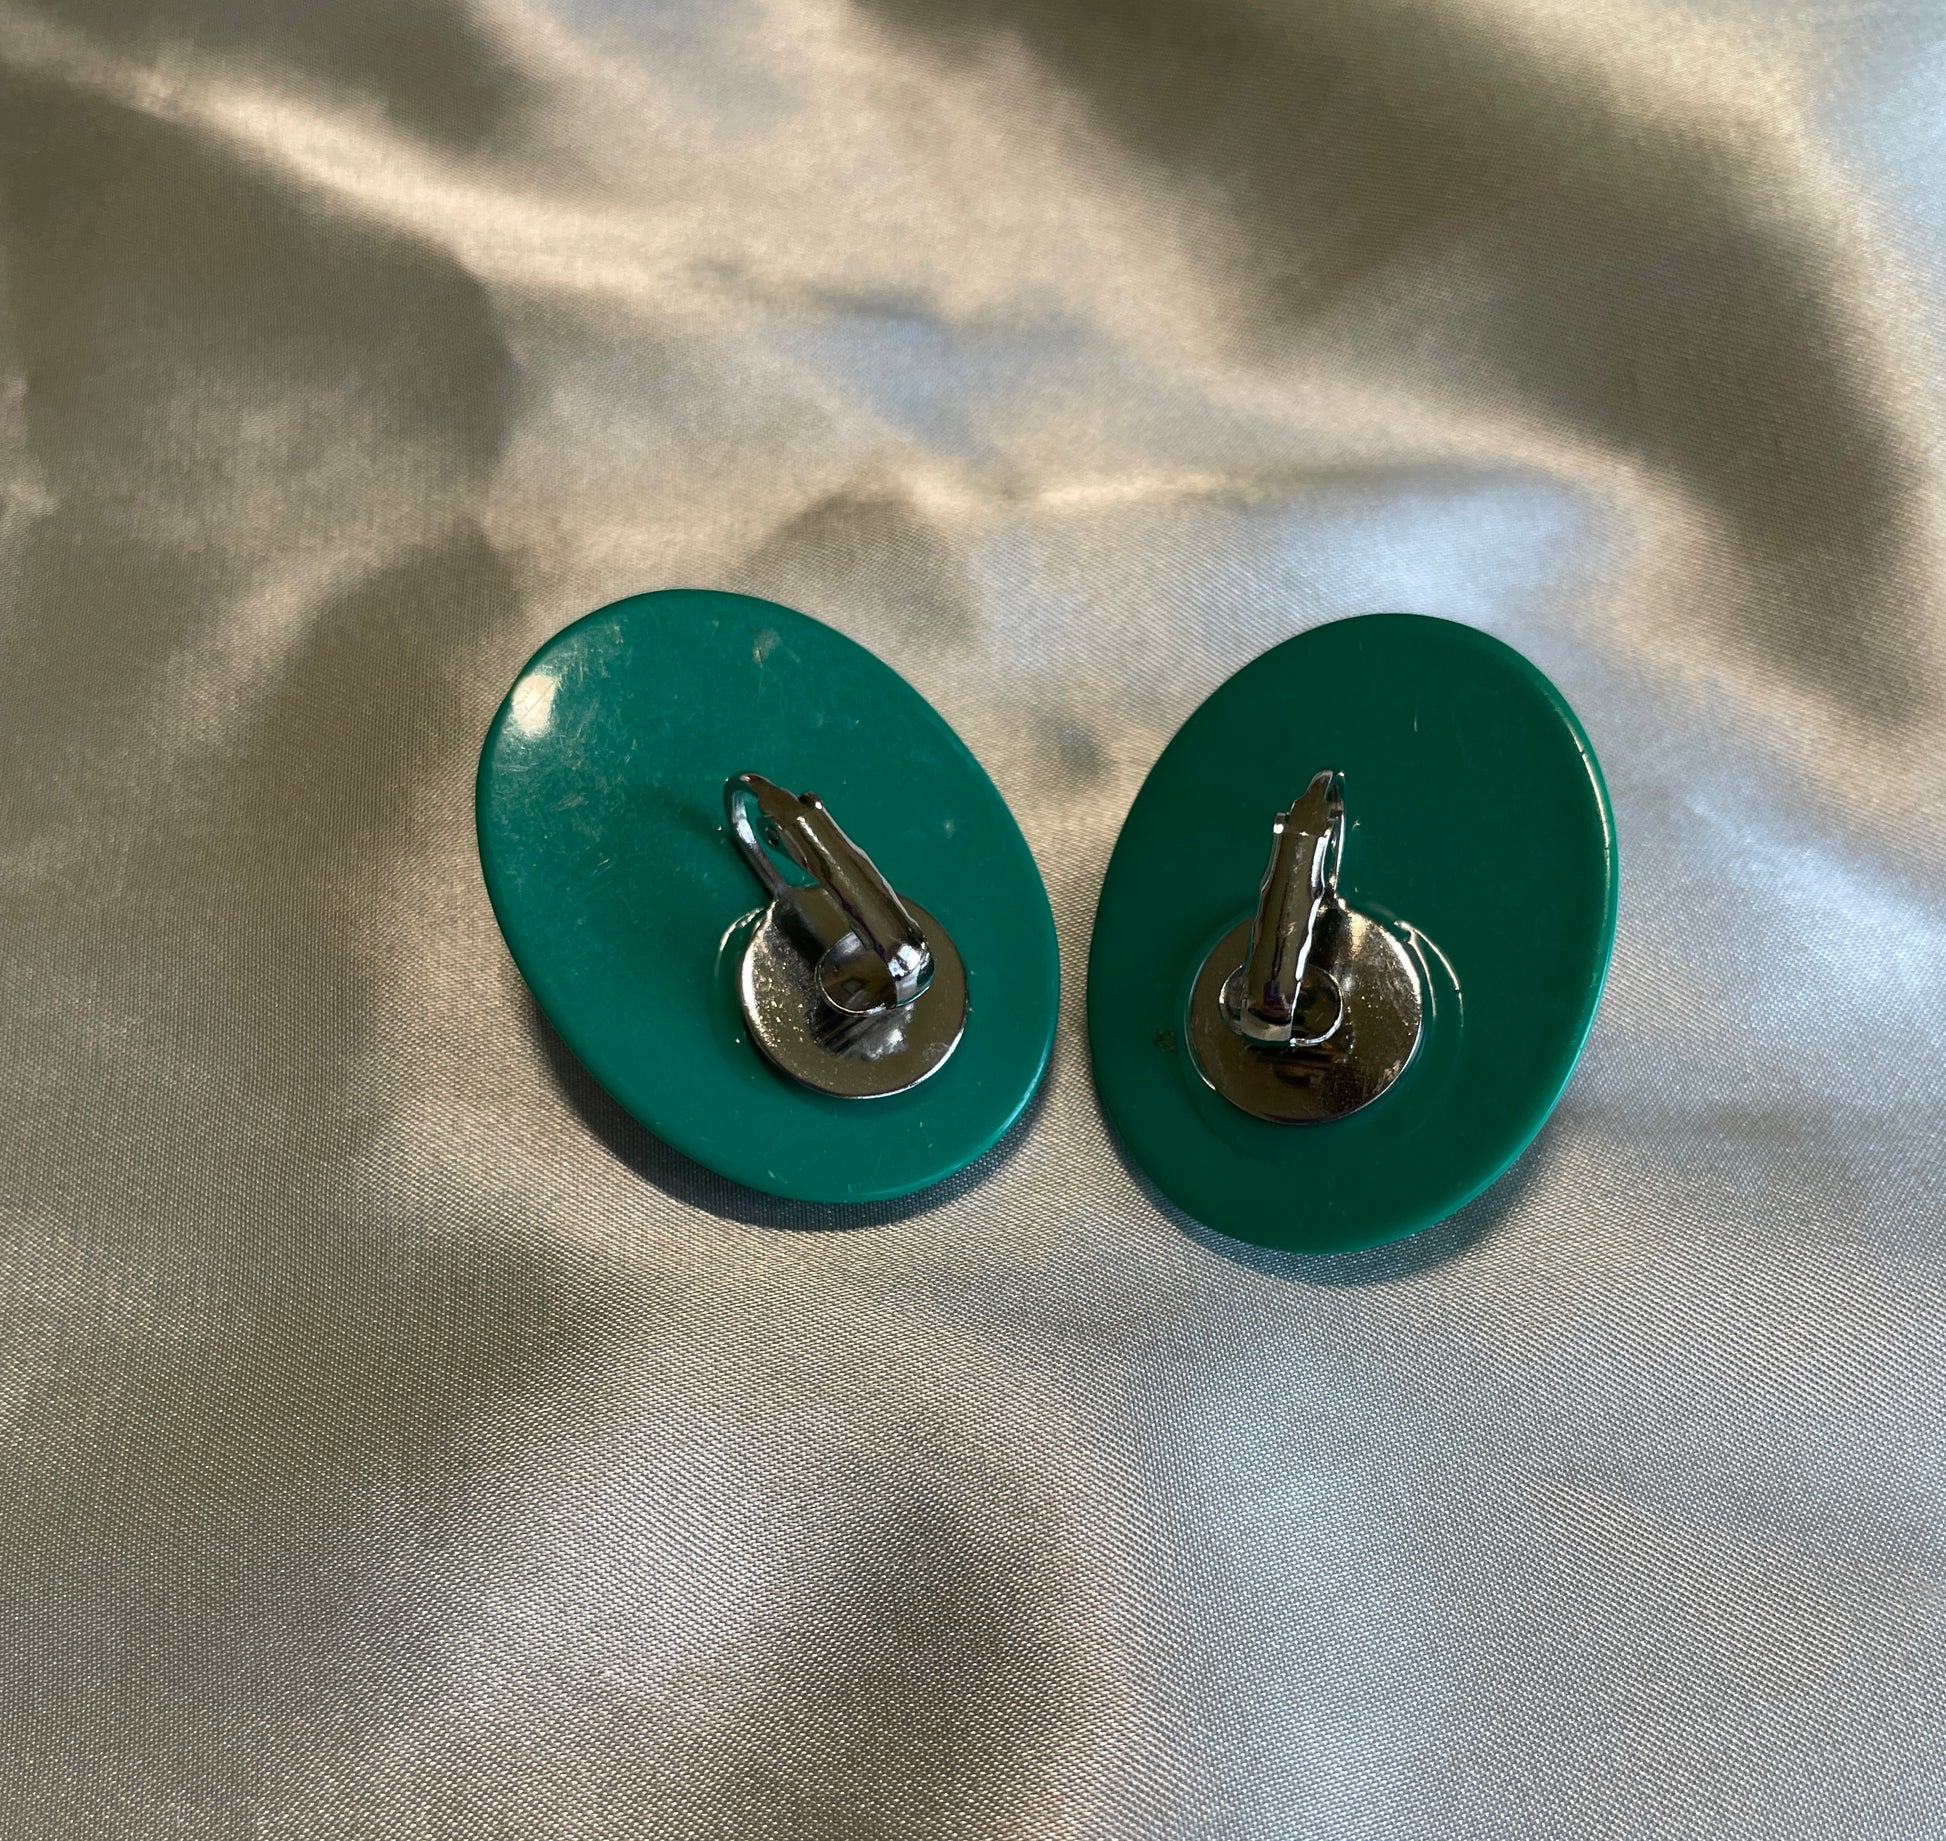  80s Mod Style Green Acrylic Brass Accent Retro Pierced Earrings